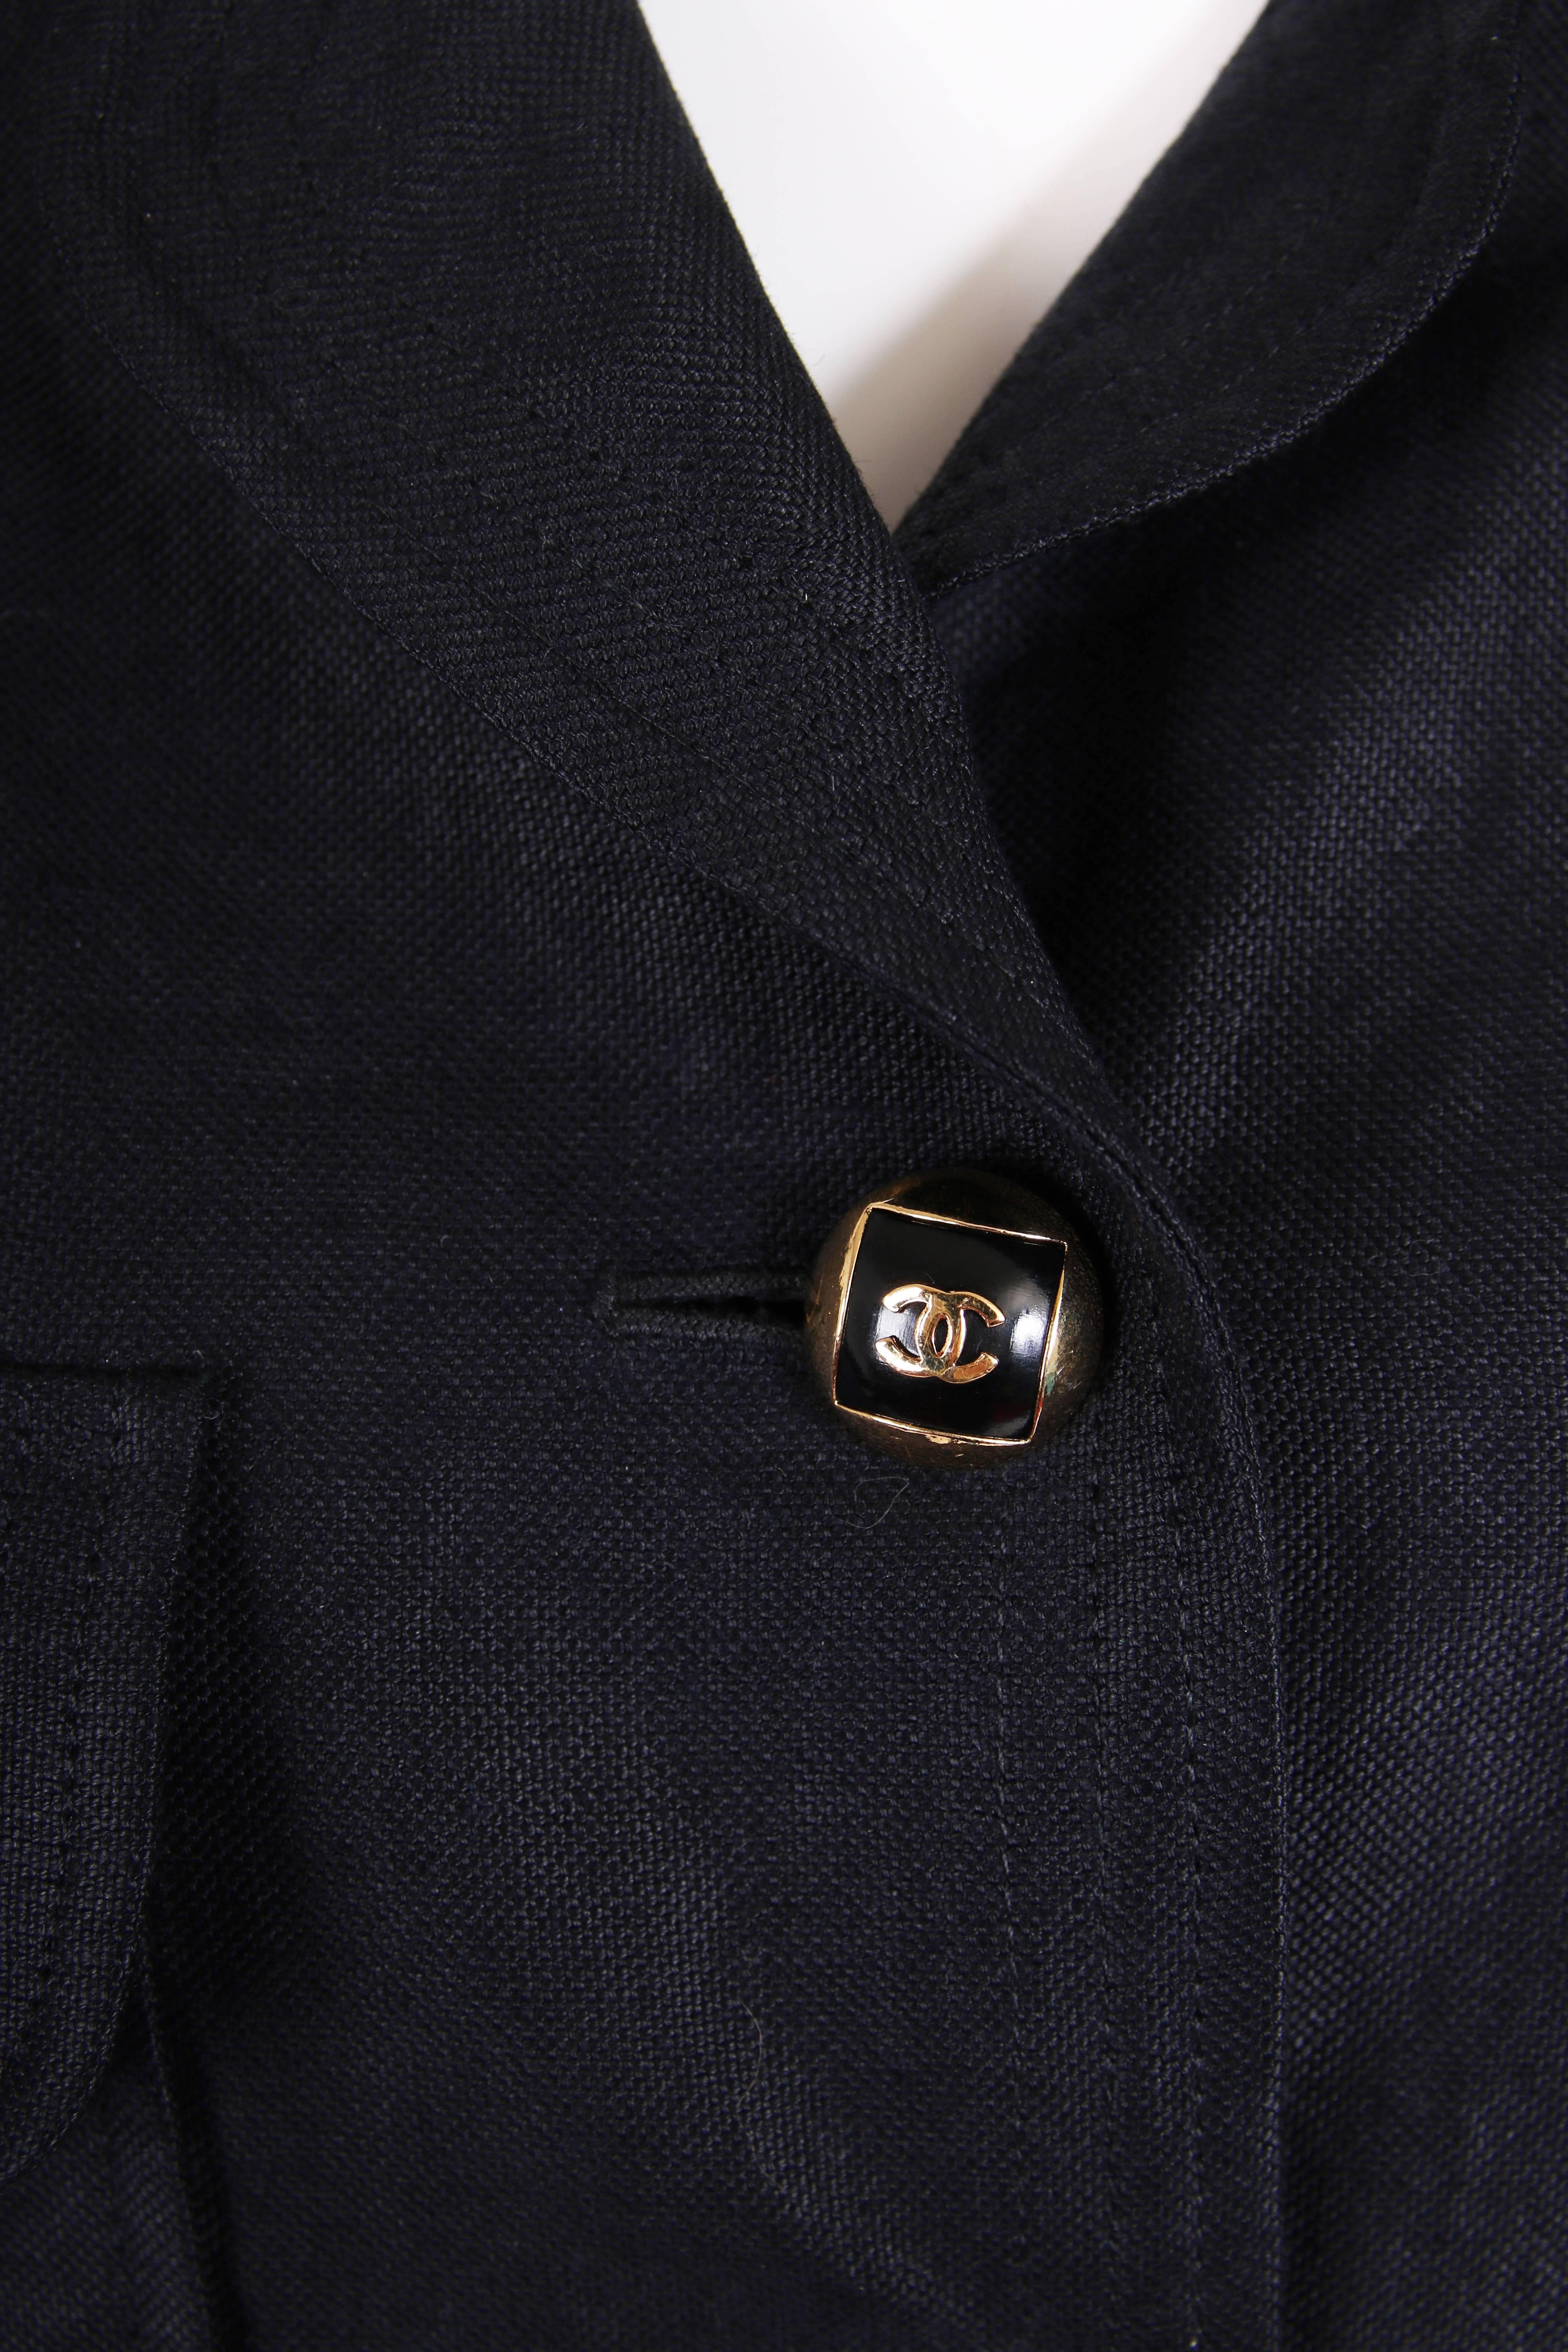 1986 Chanel Black Linen Blazer Jacket w/Black & Gold CC Logo Buttons 1